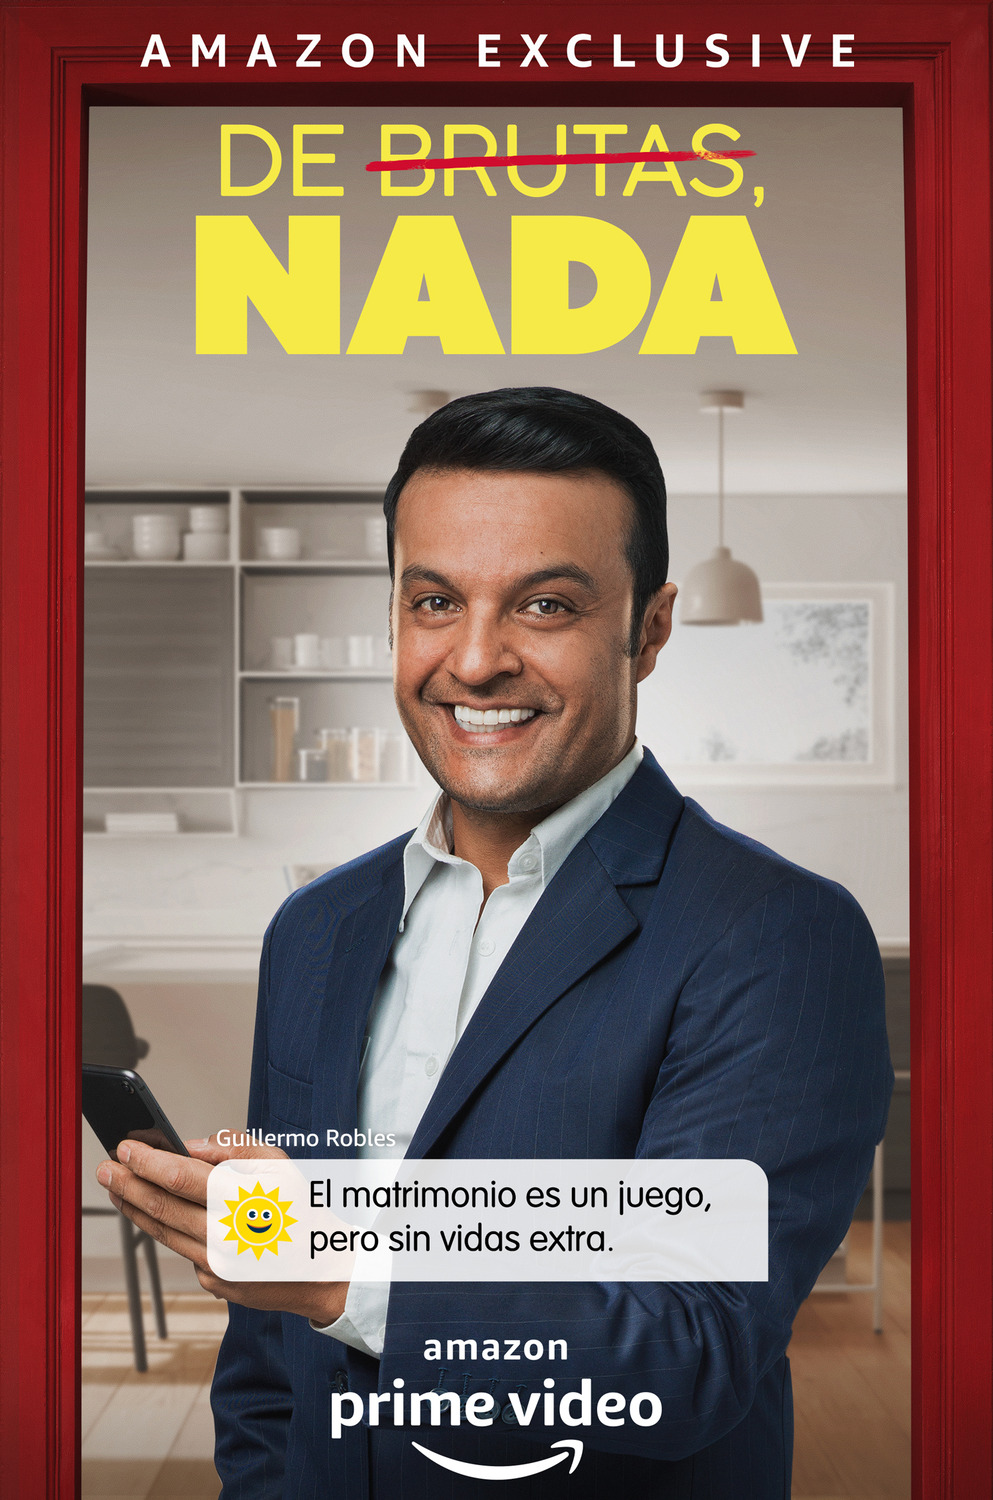 Extra Large TV Poster Image for De Brutas, Nada (#8 of 22)